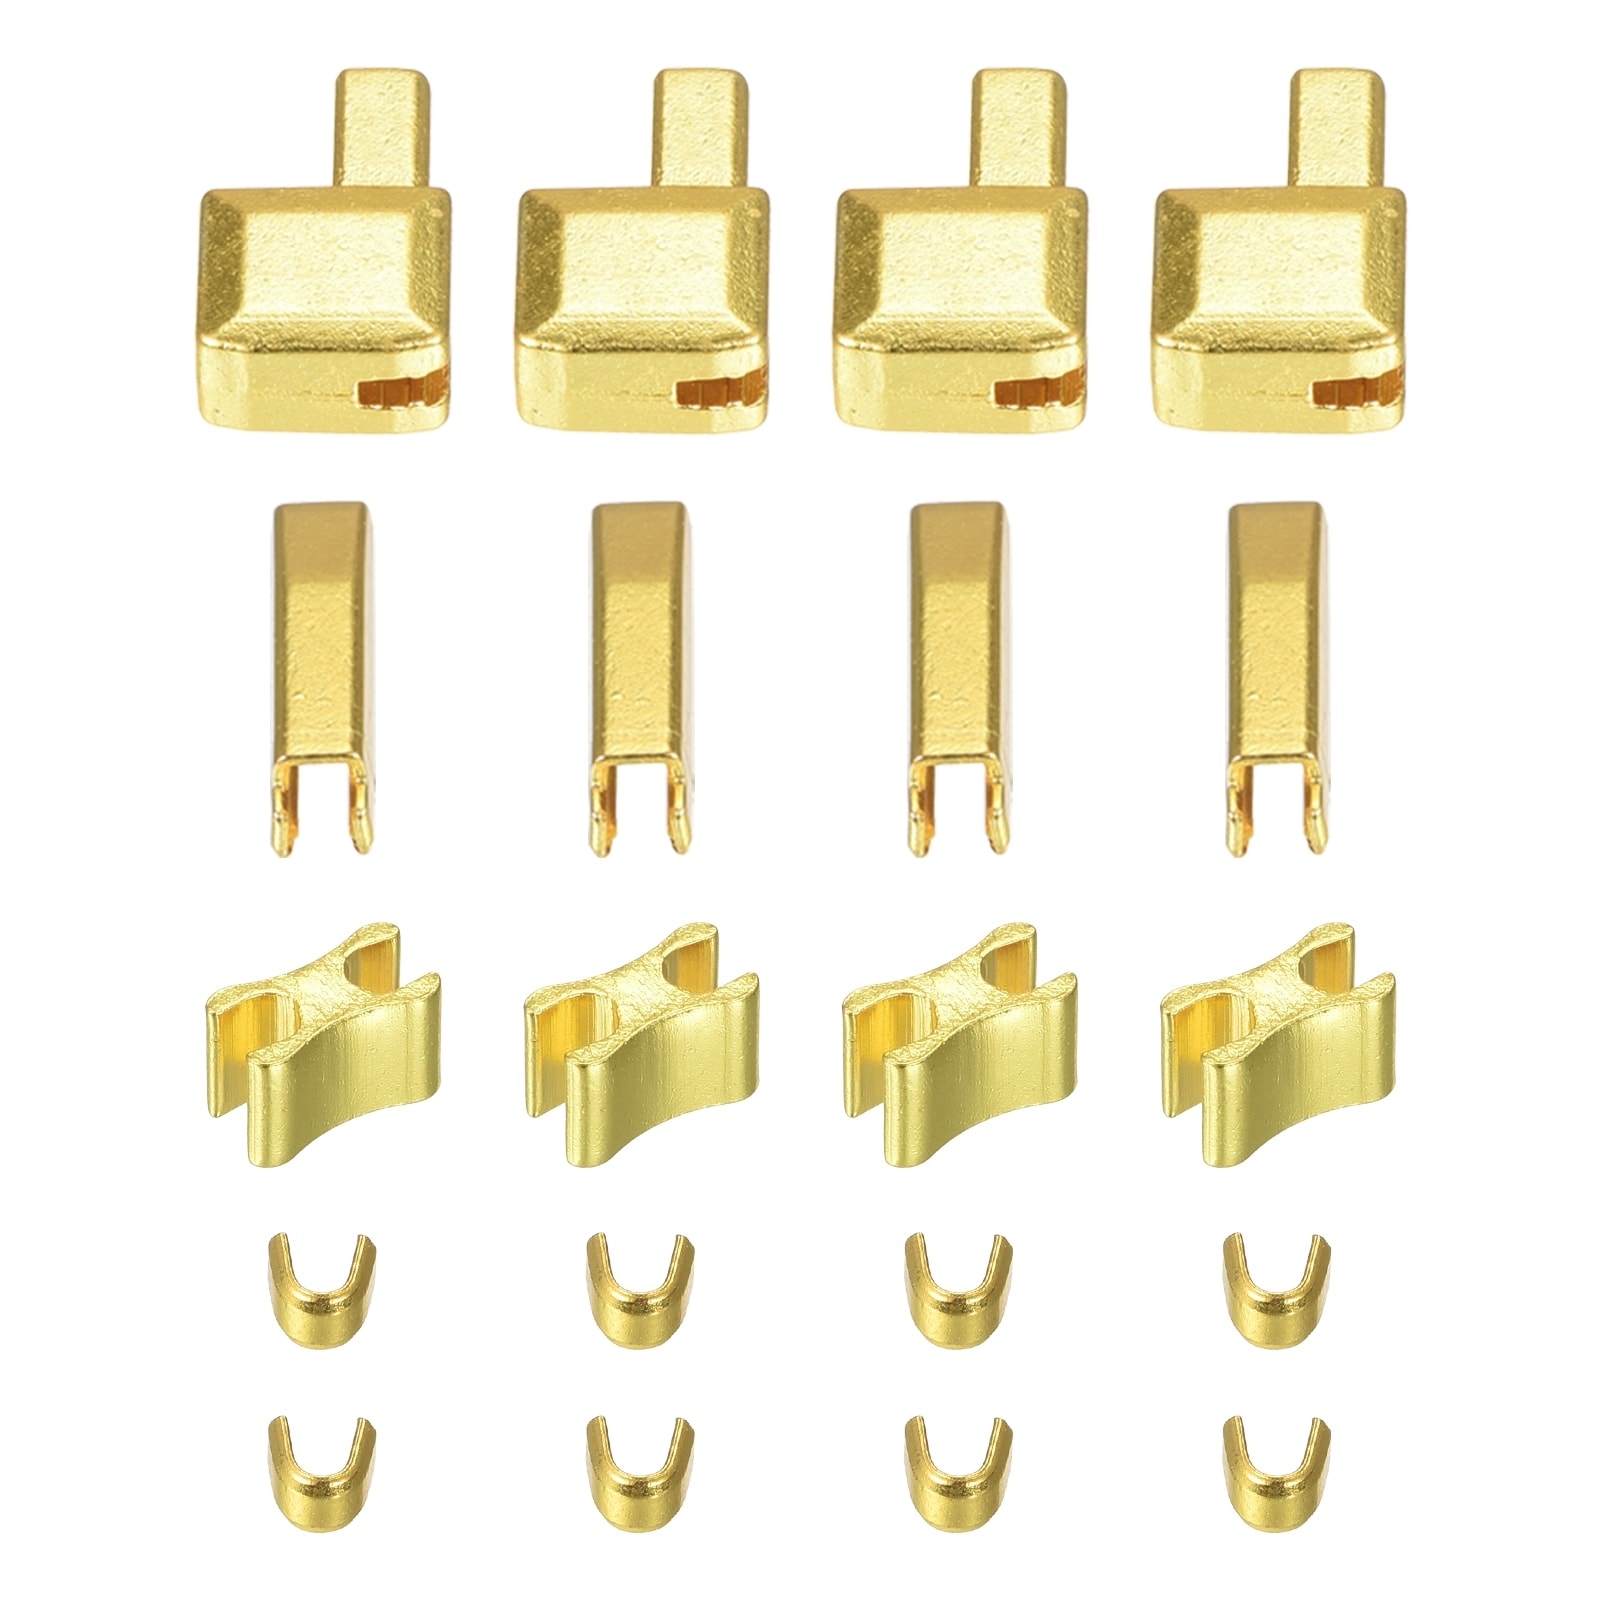 #10 Solid Brass Golden Zipper Top Stop and Bottom Stop,Zipper Repair Kit,Zipper Slider Retainer (#10)